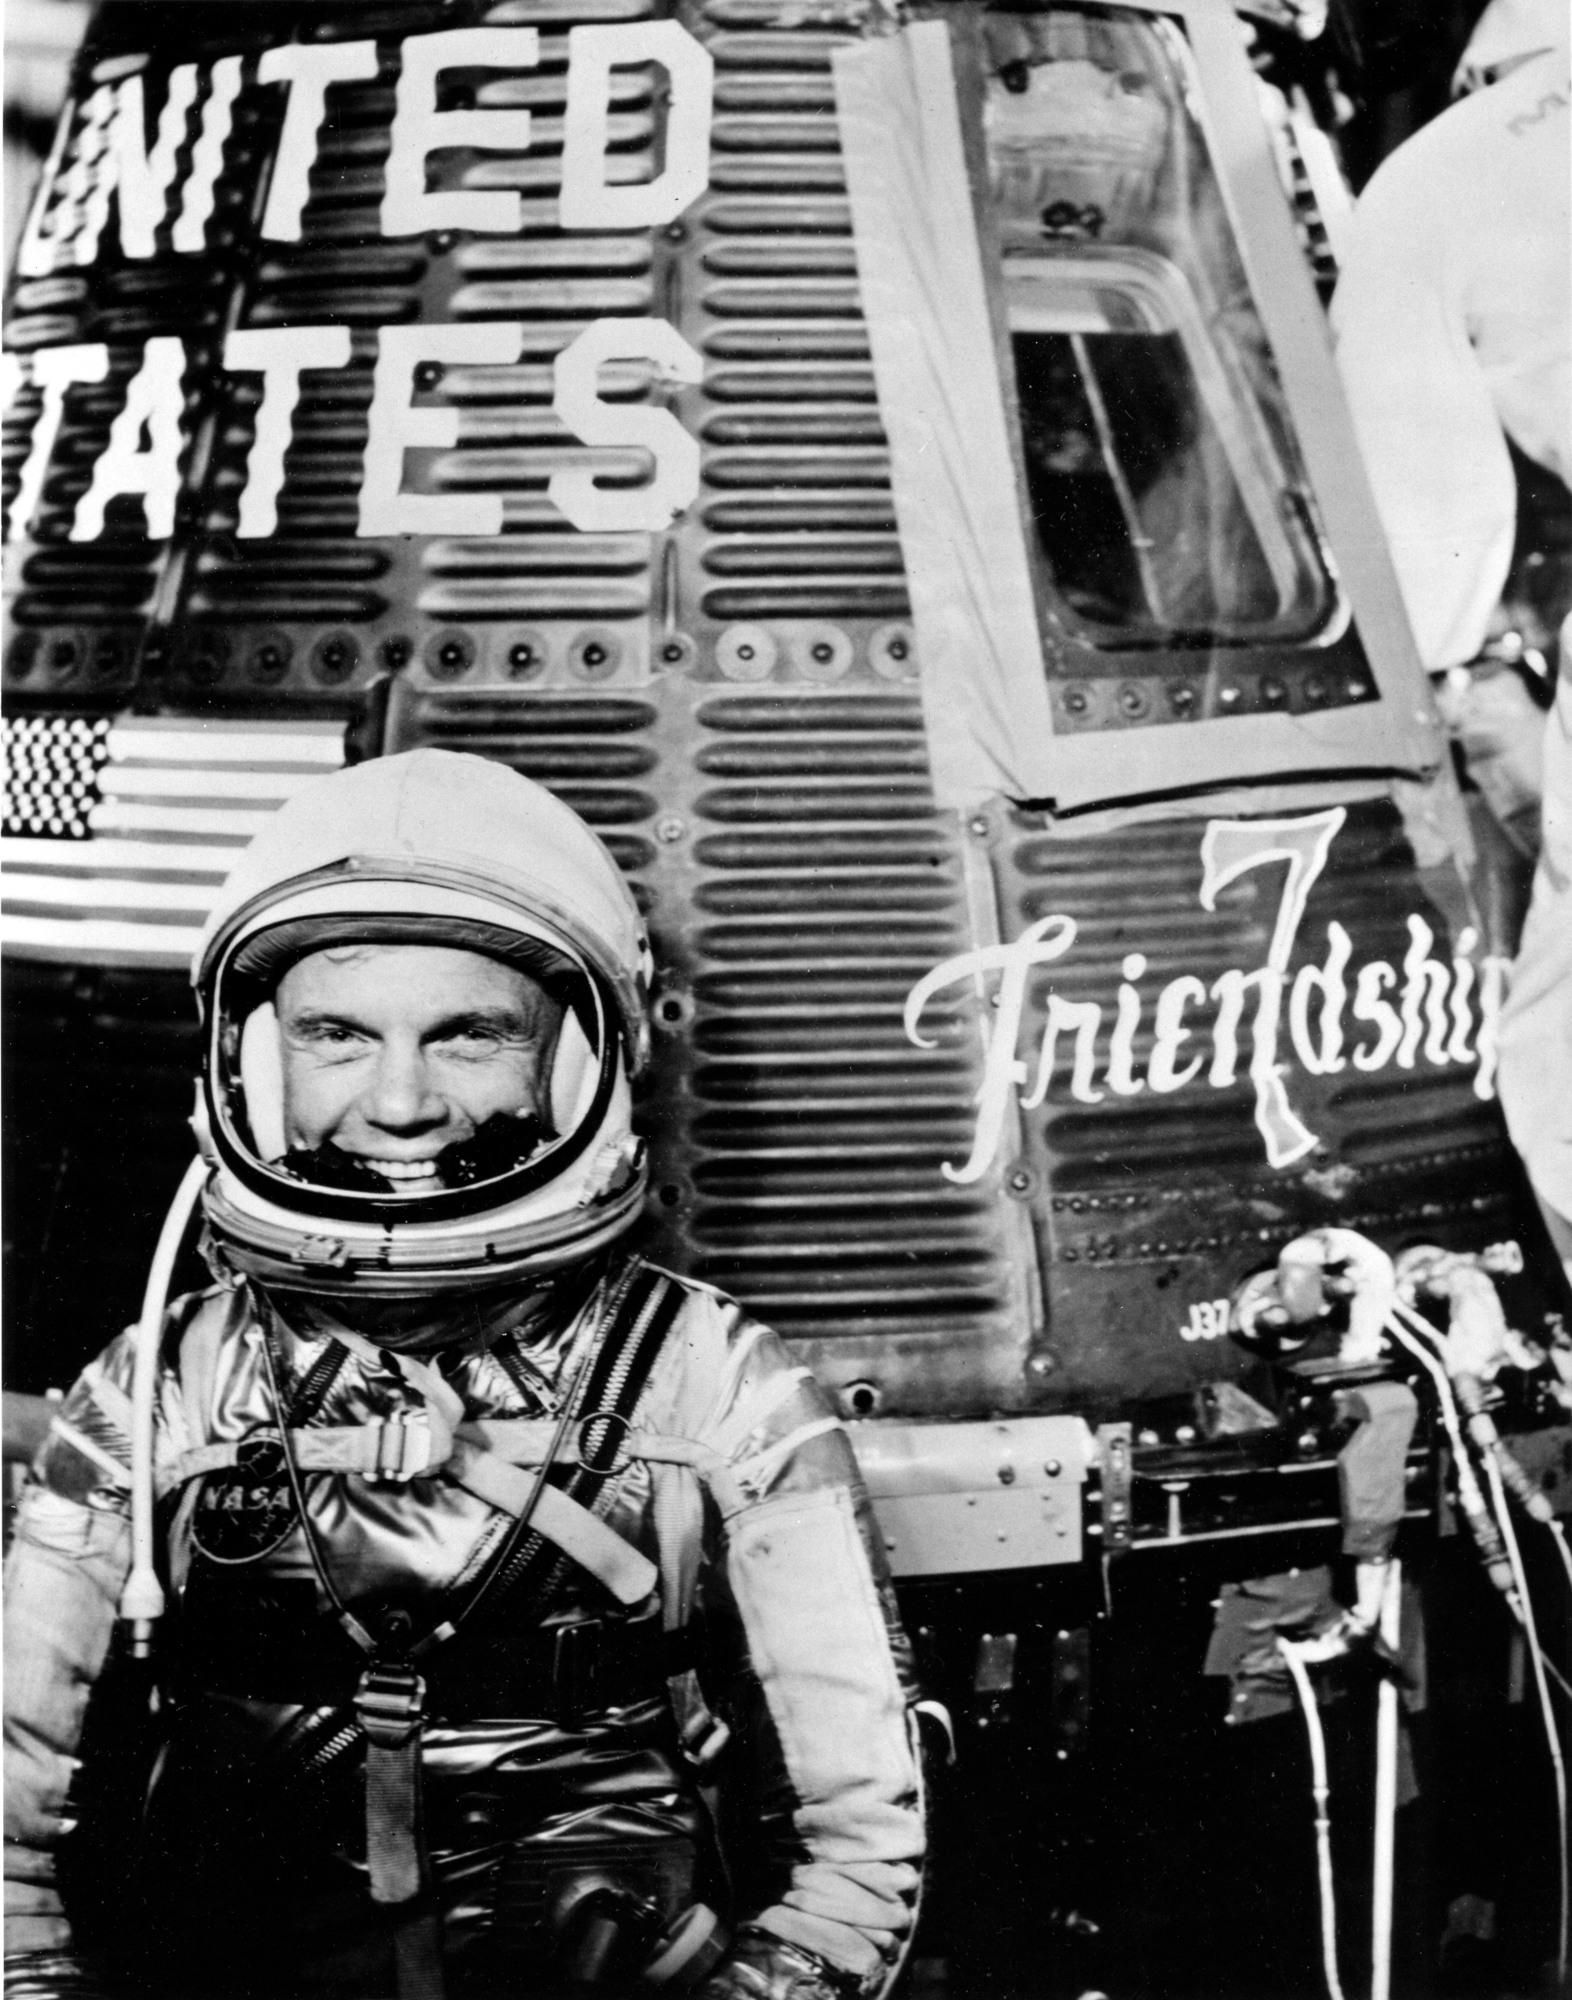 On Feb. 20, 1962, John Glenn became the first American to orbit Earth. Photo courtesy of NASA